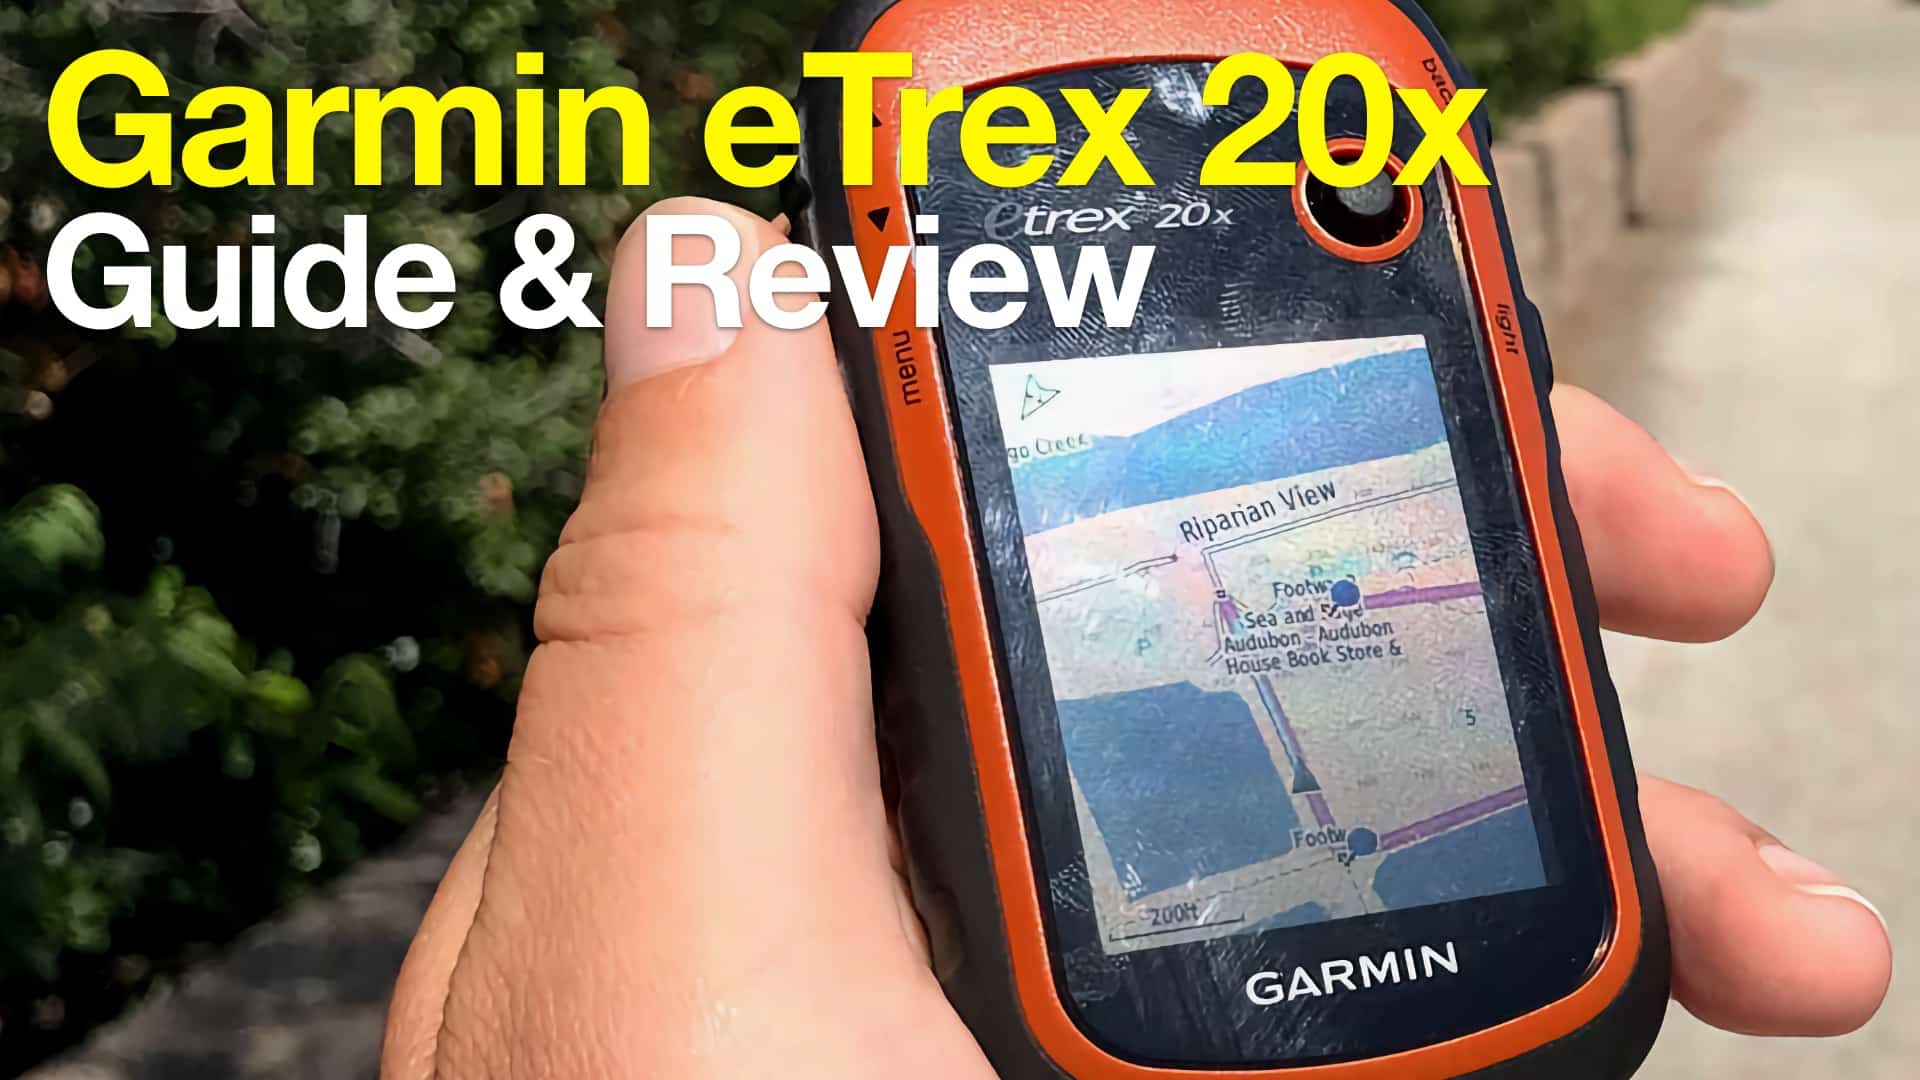 virksomhed imperium Vanding Garmin eTrex 20x Hiking GPS Review - HikingGuy.com